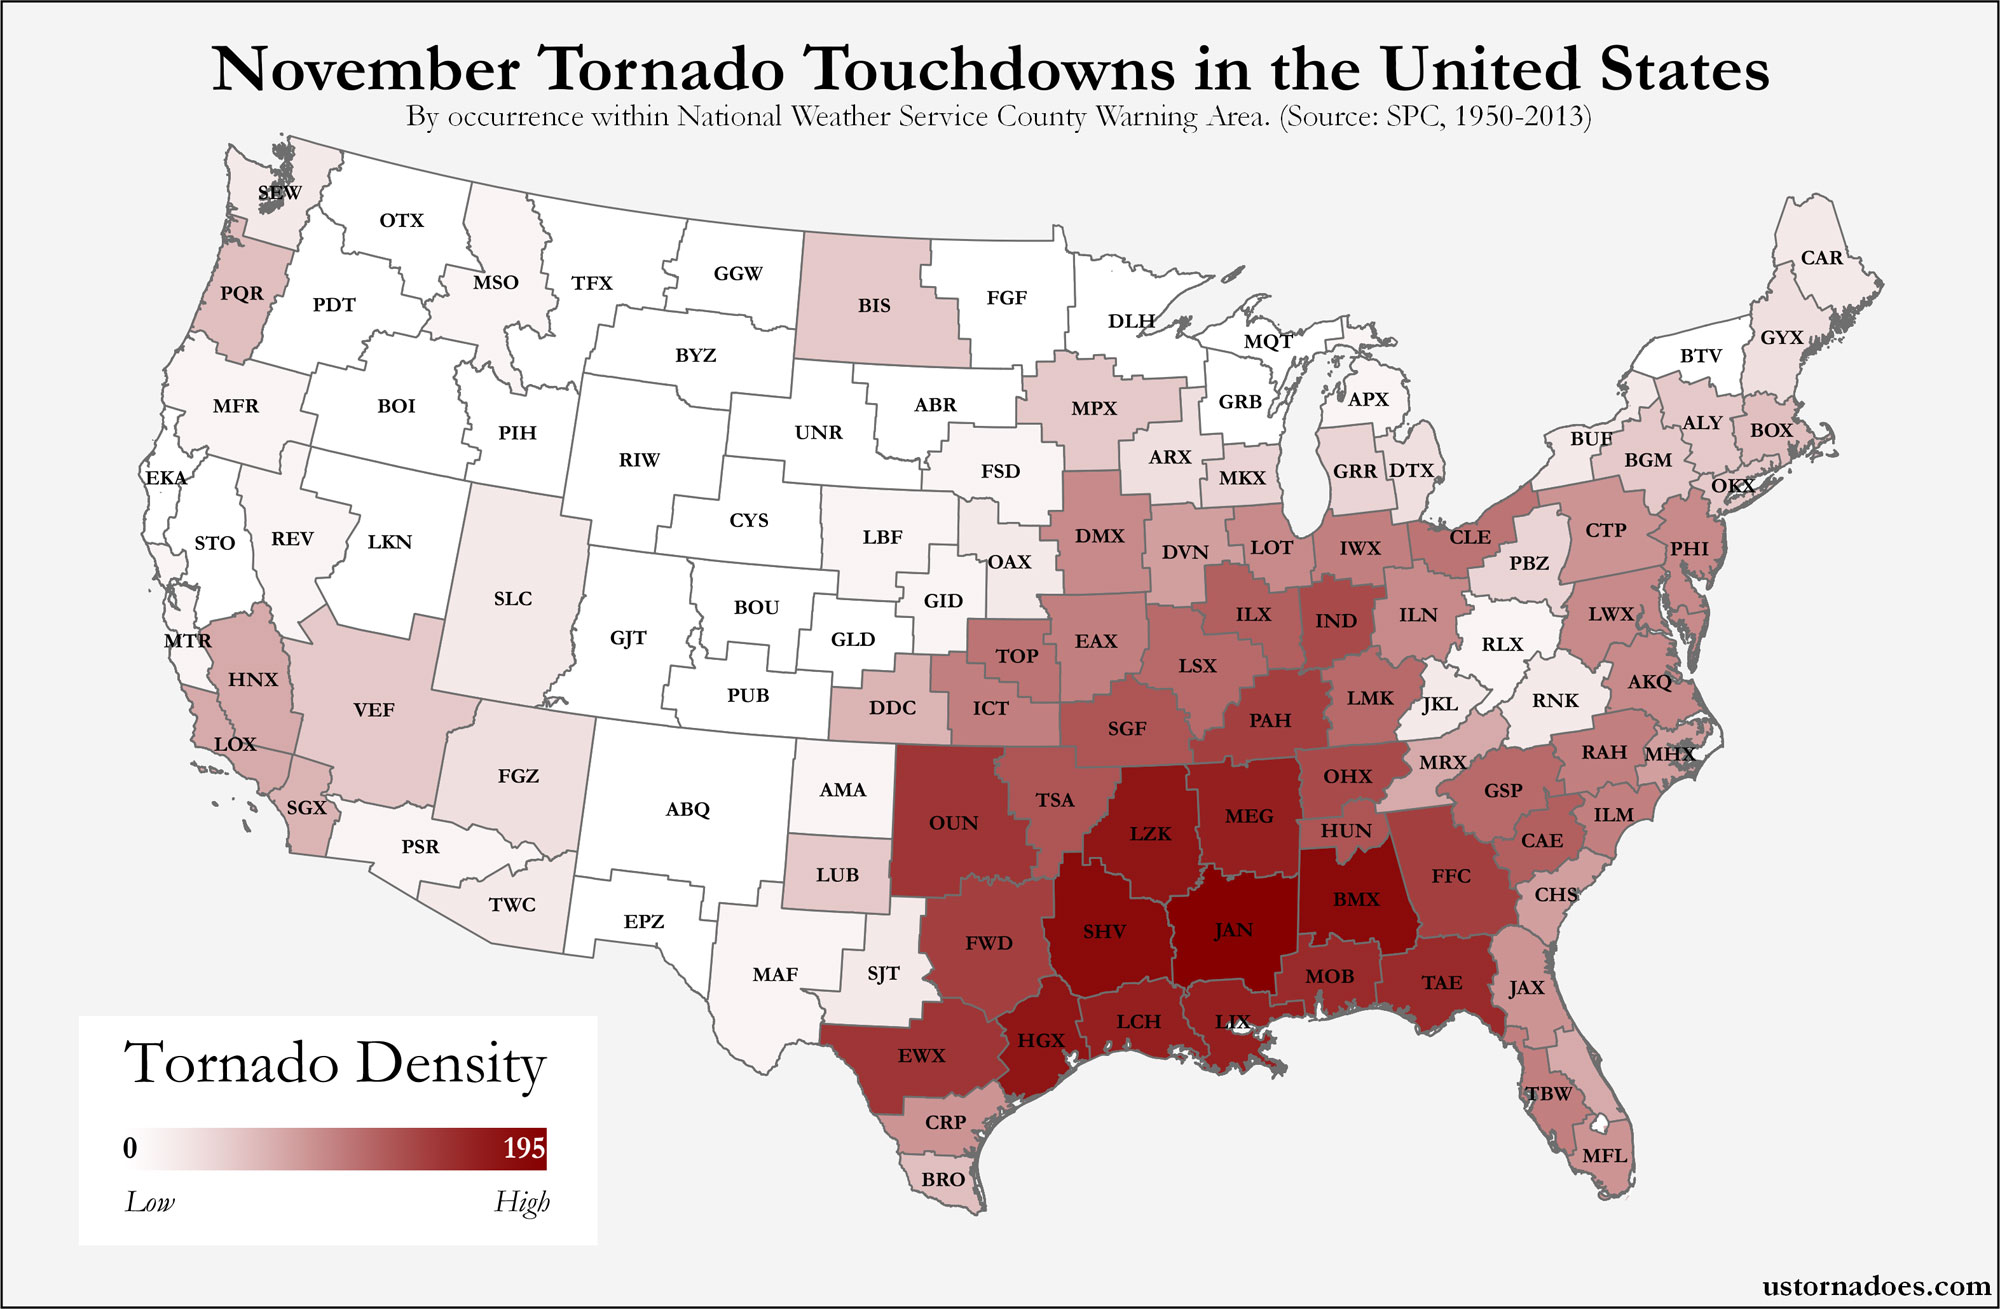 november-tornado-touchdown-nws-county-warning-area